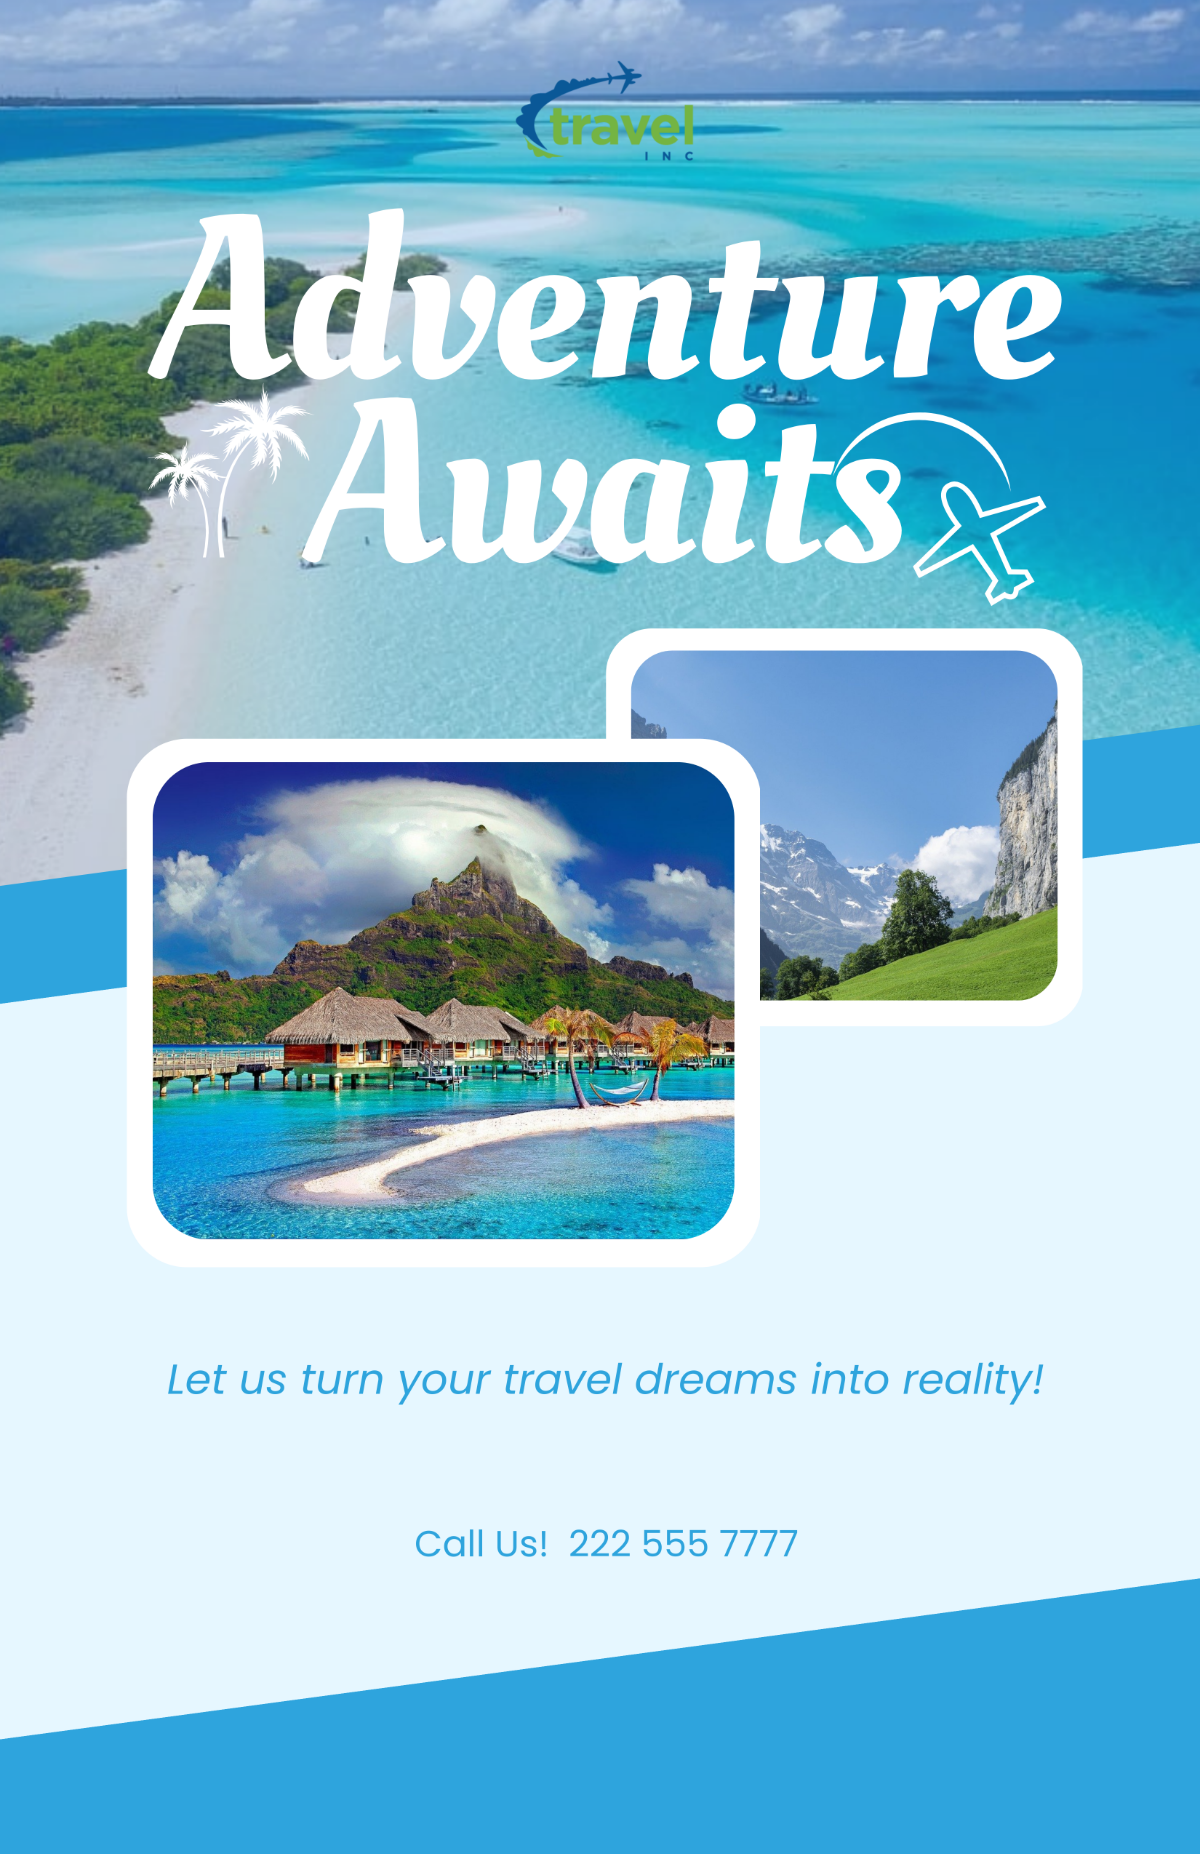 Travel Agency Marketing Poster